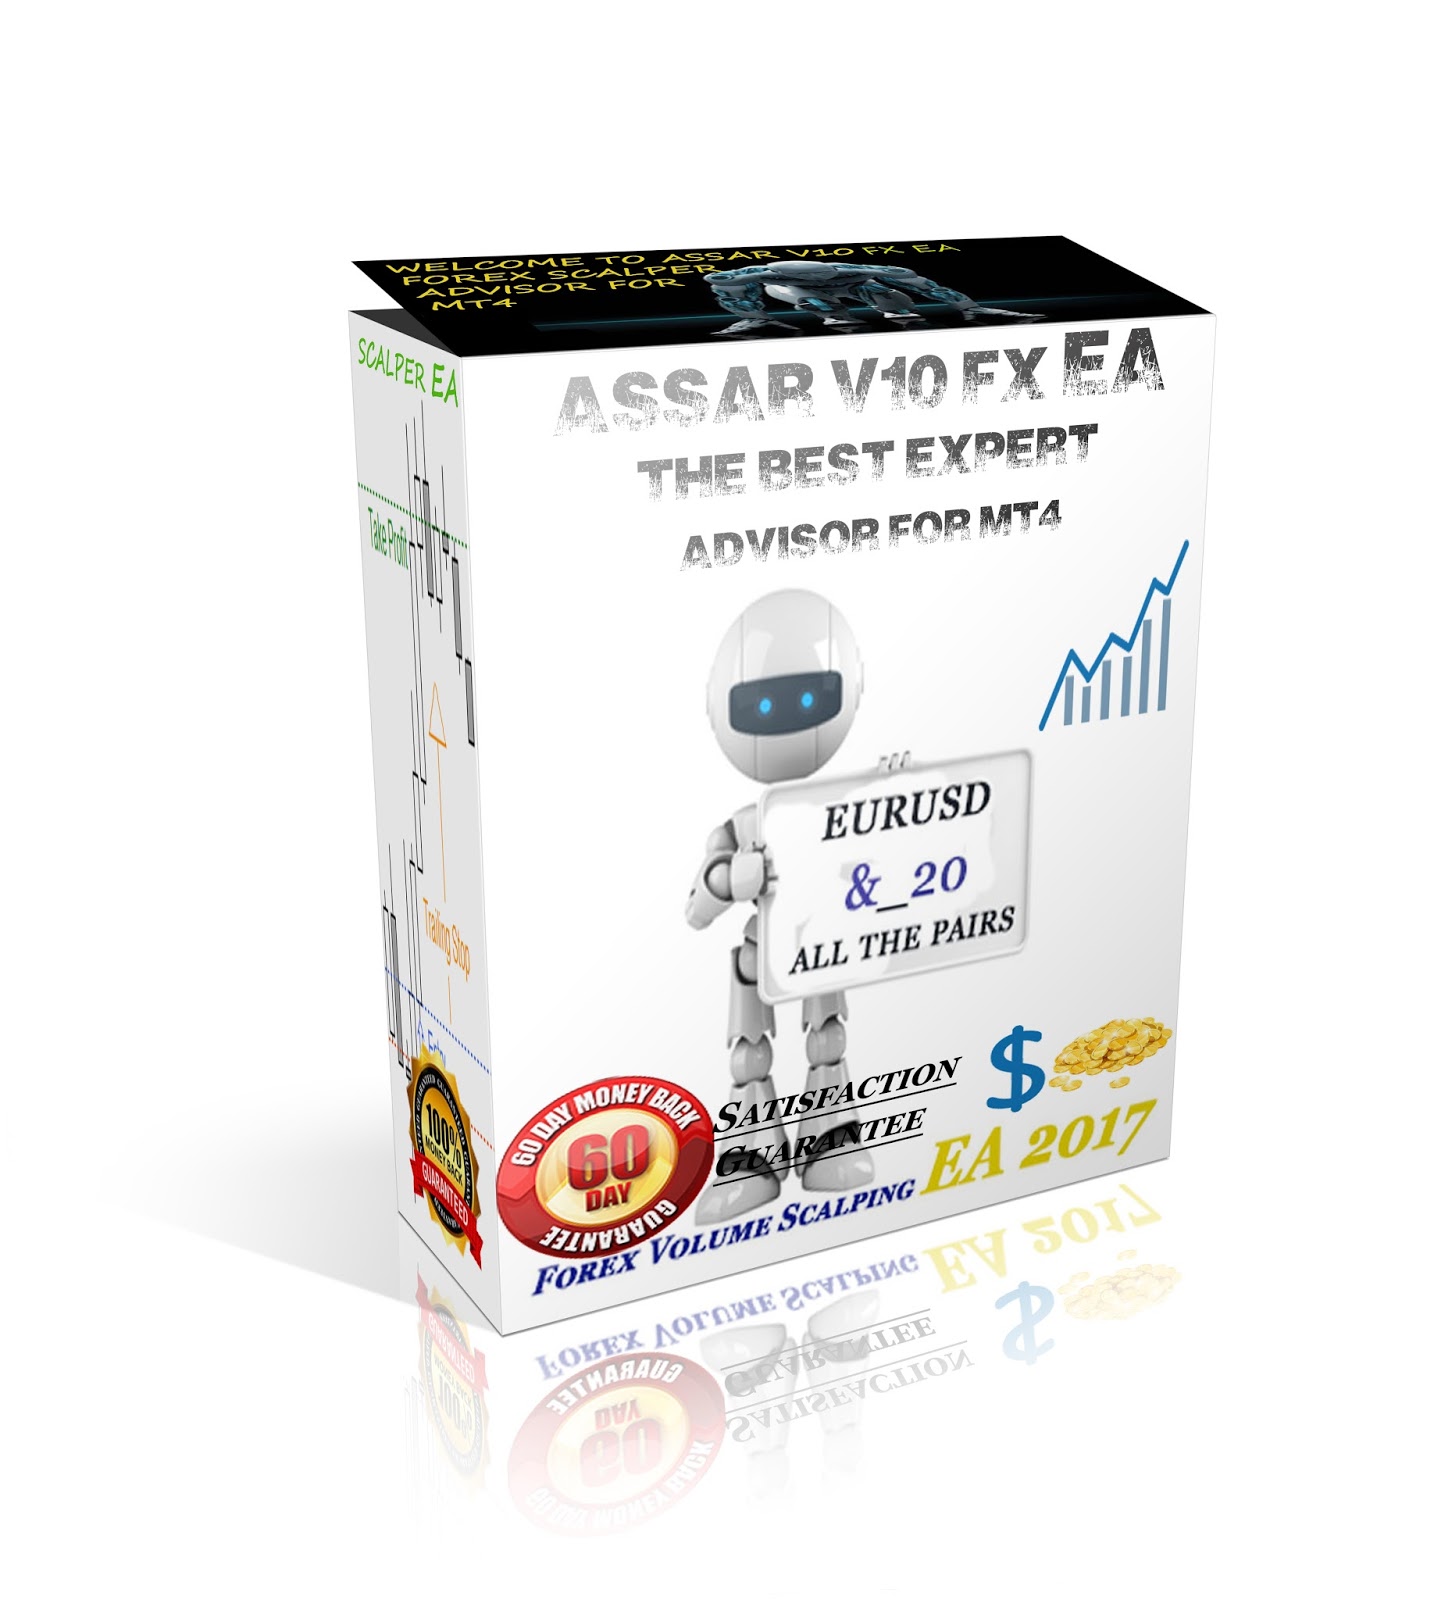 Assar elite pro forex scalper v10 free download